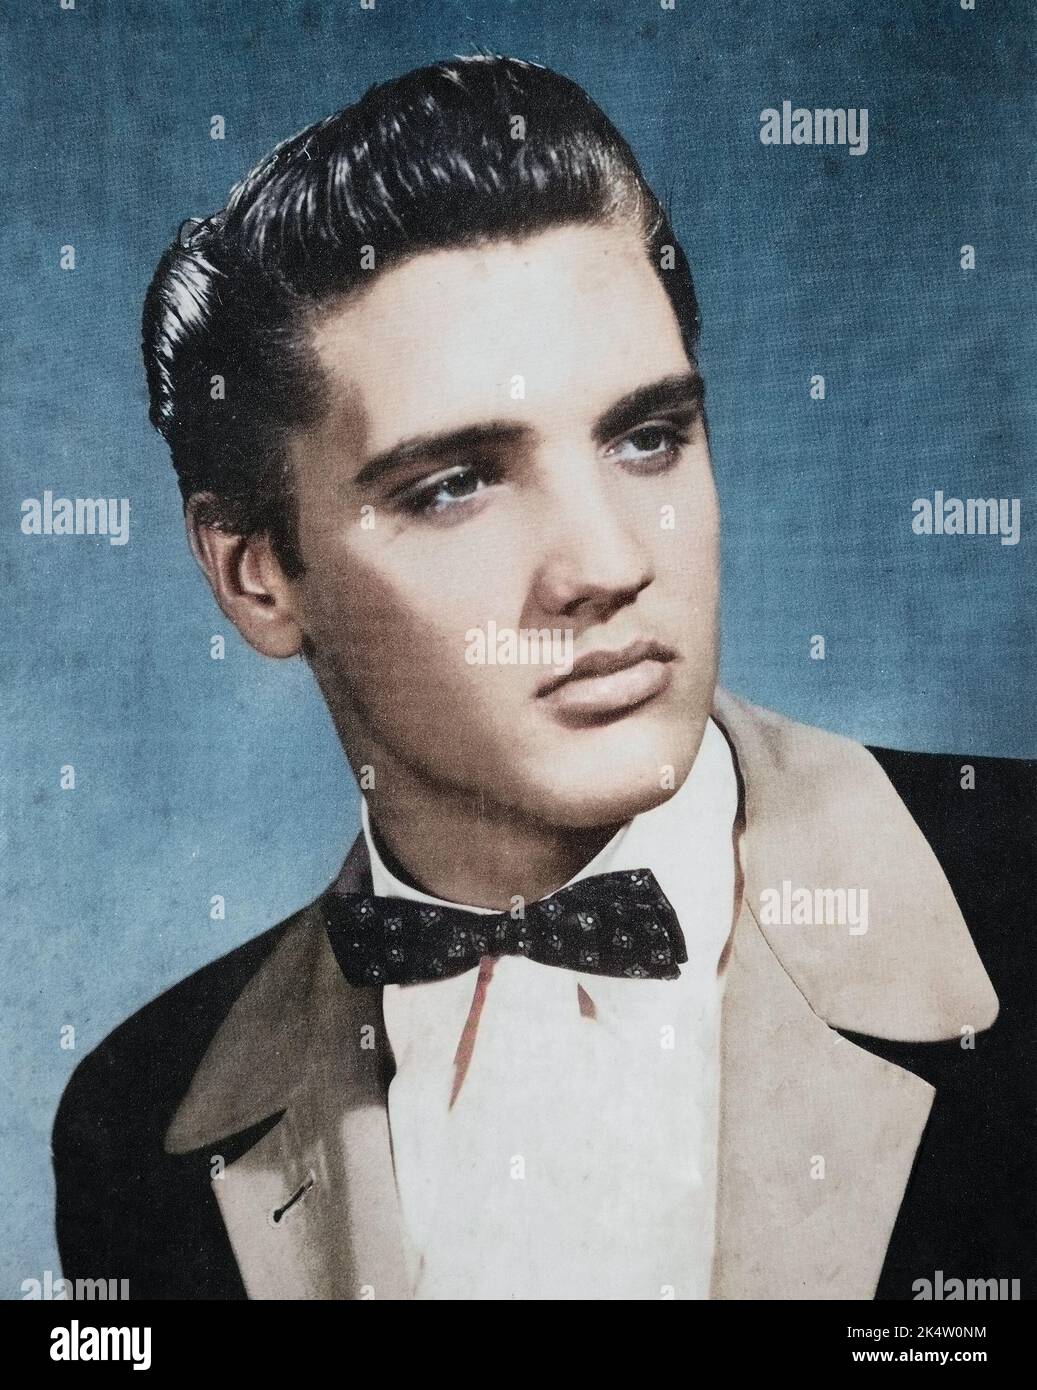 Elvis Presley black and white portrait photograph, Circa 1954-1955, colorized Stock Photo